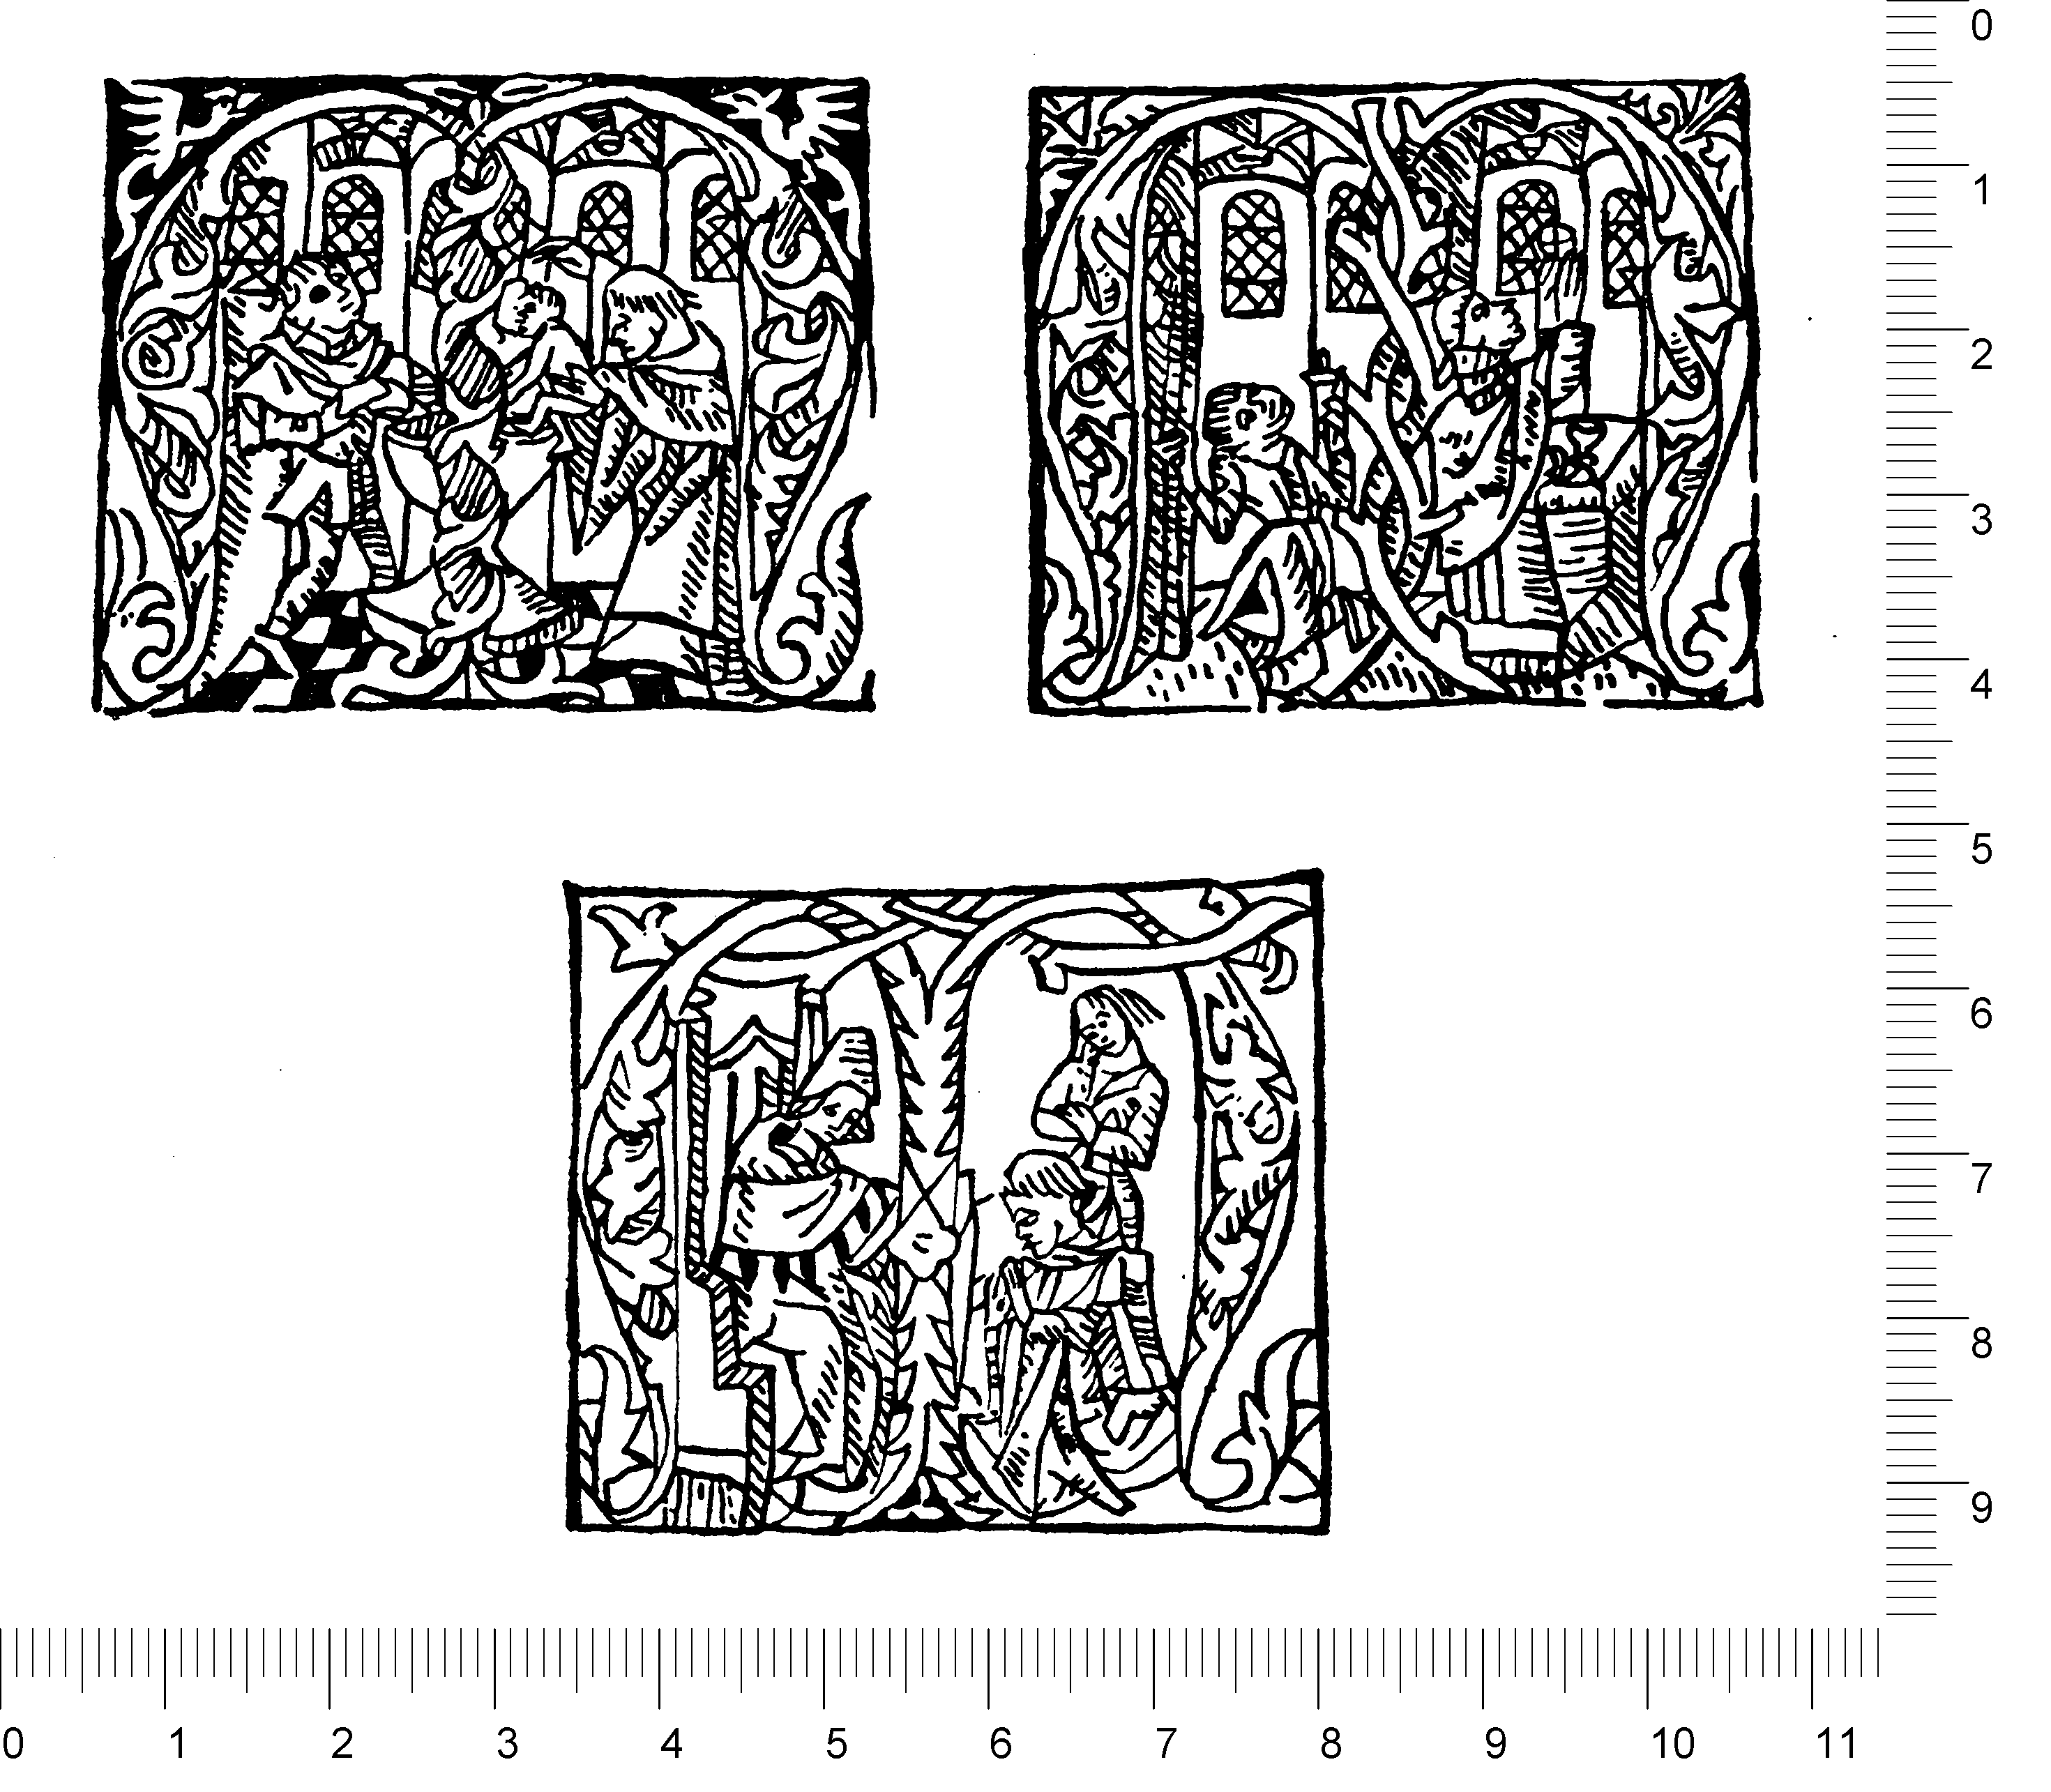 Abbildung der GfT-Tafeln vonGfT1363.2